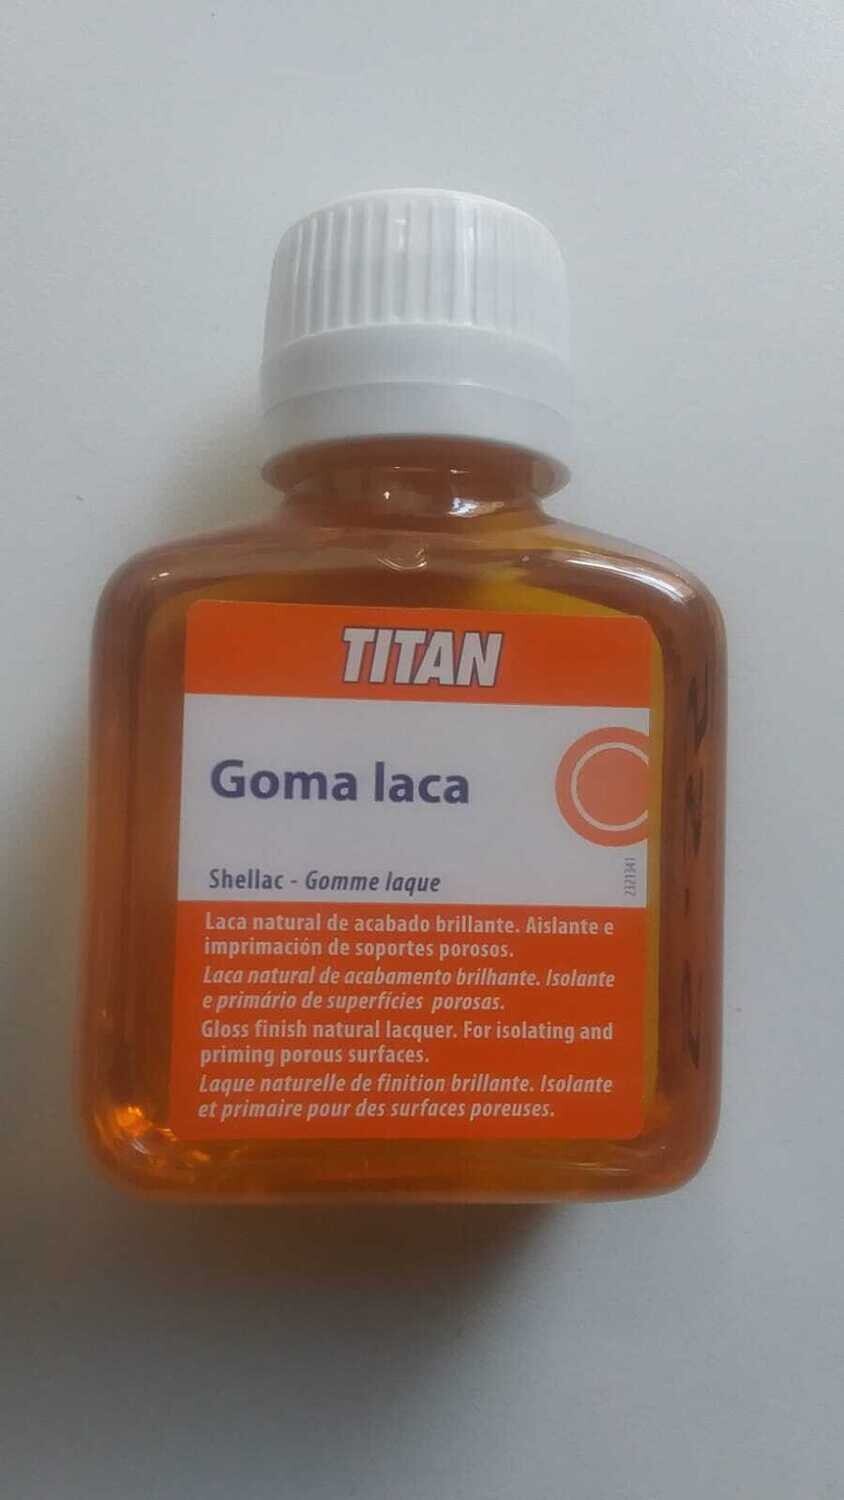 GOMA LACA